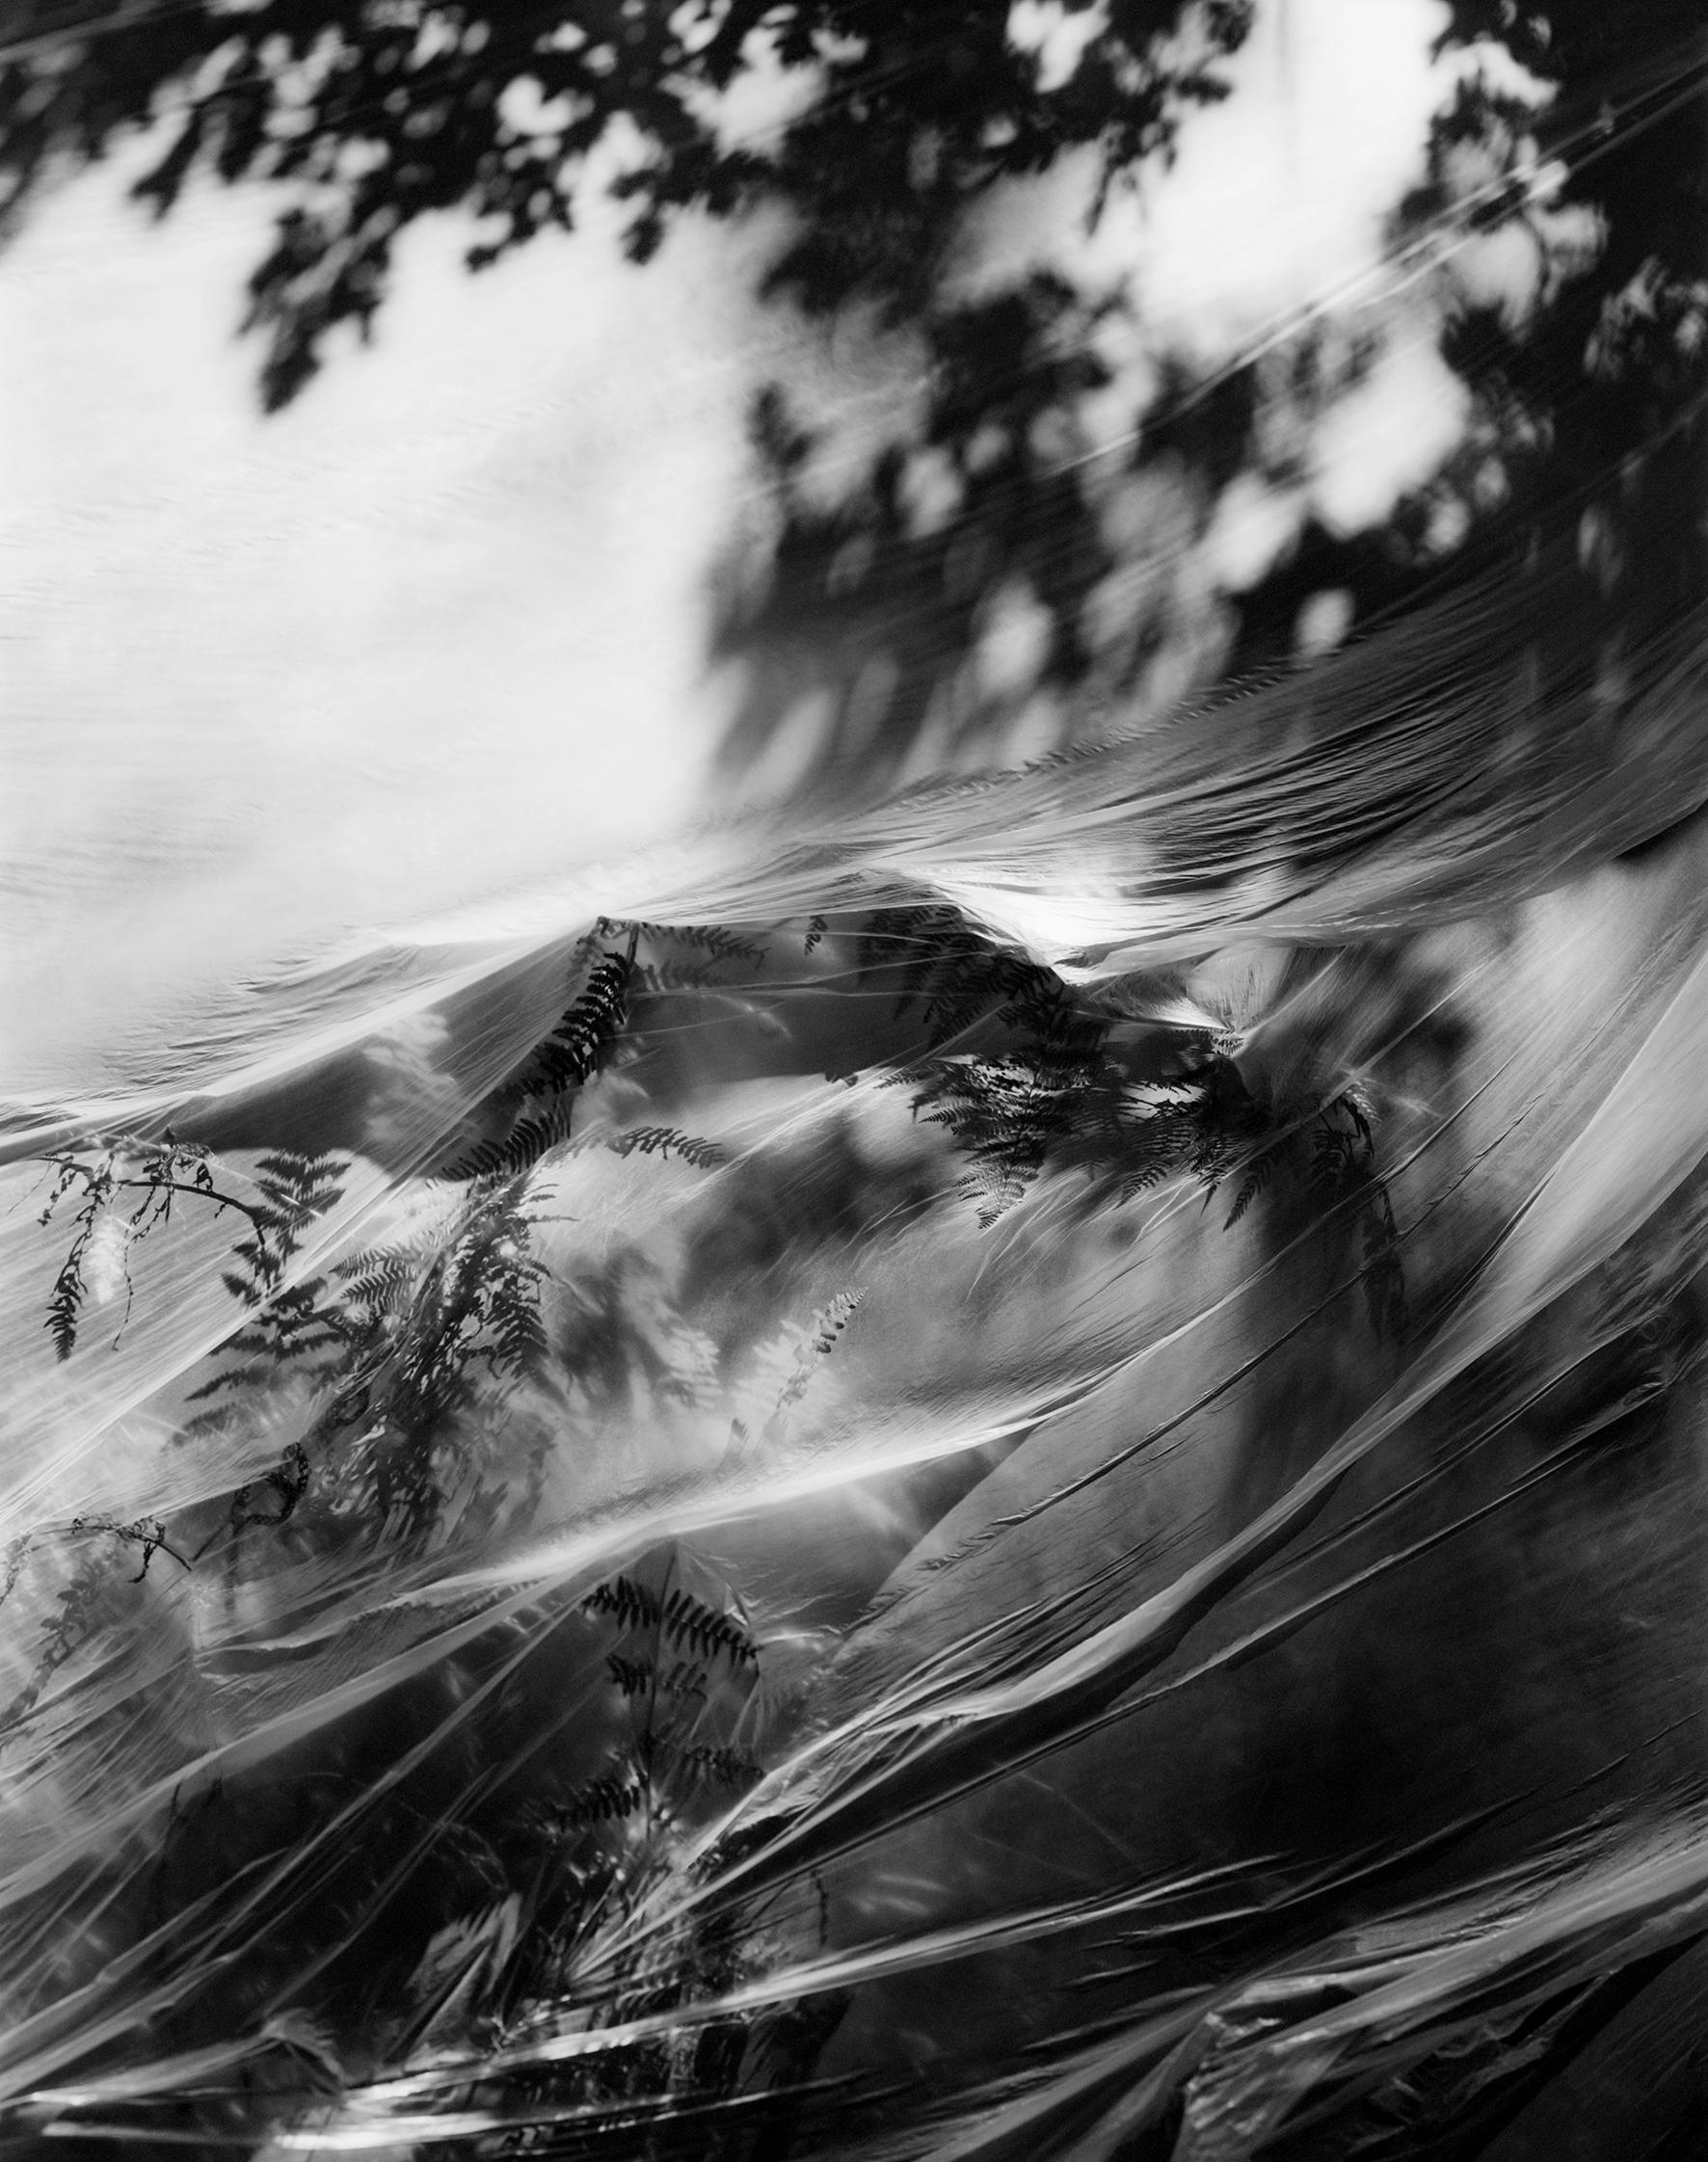 Ugne Pouwell Landscape Photograph - Oak and Fern - black and white landscape photography, Limited edition of 20 